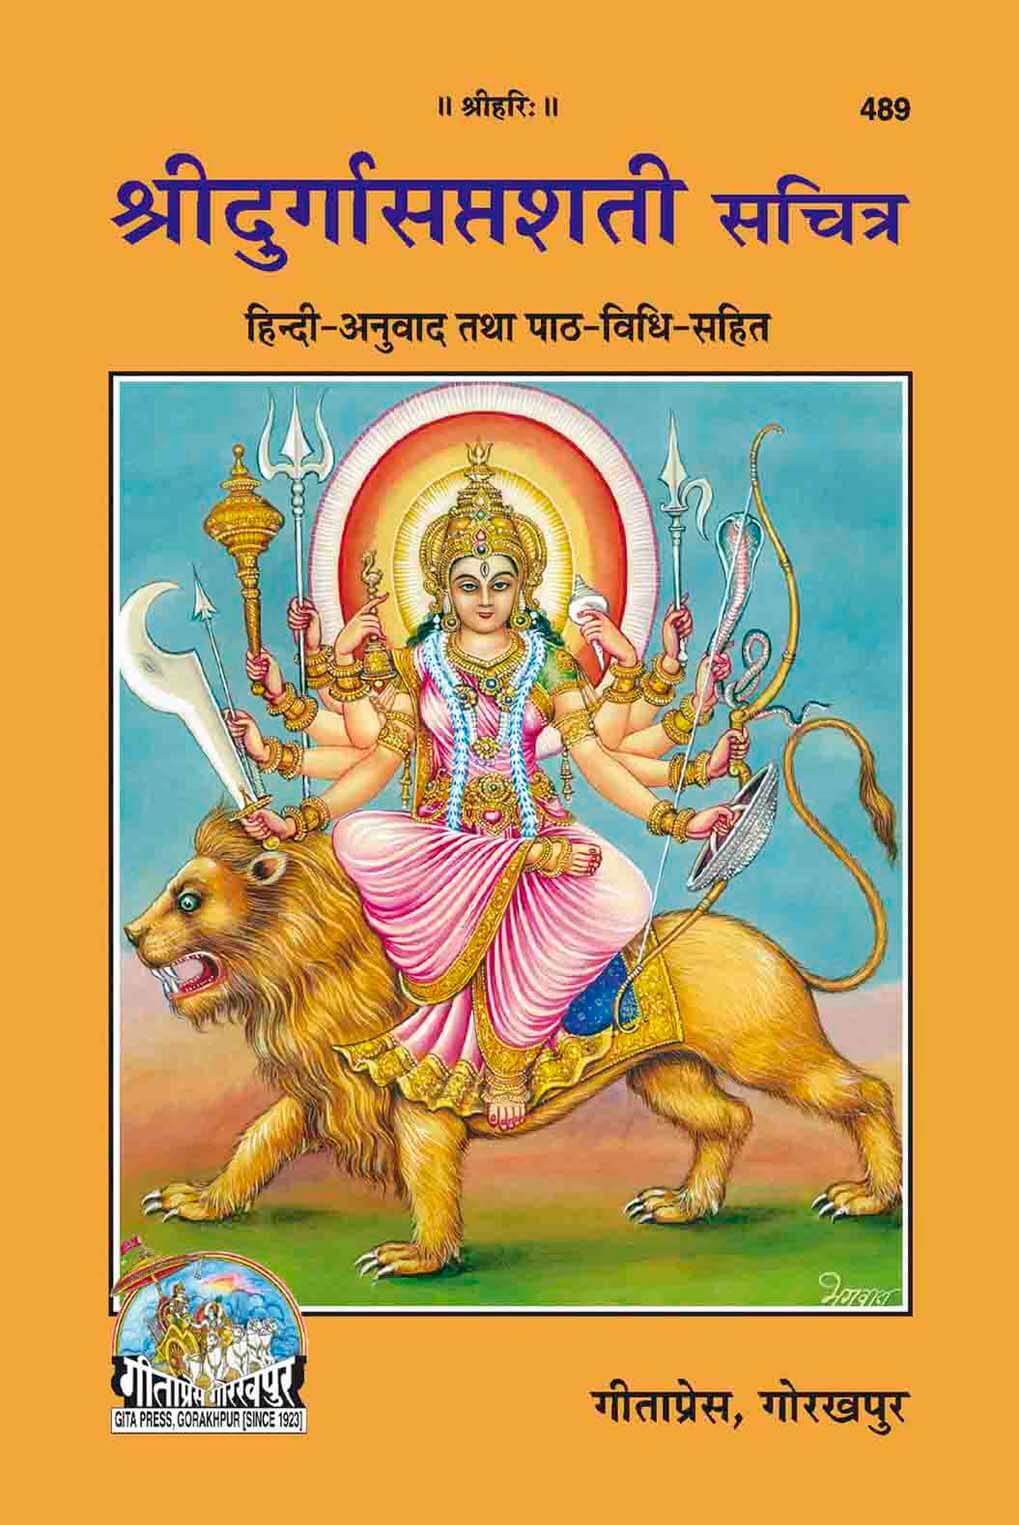 Shri Durga Saptashati (With Hindi Translation) by Gita Press